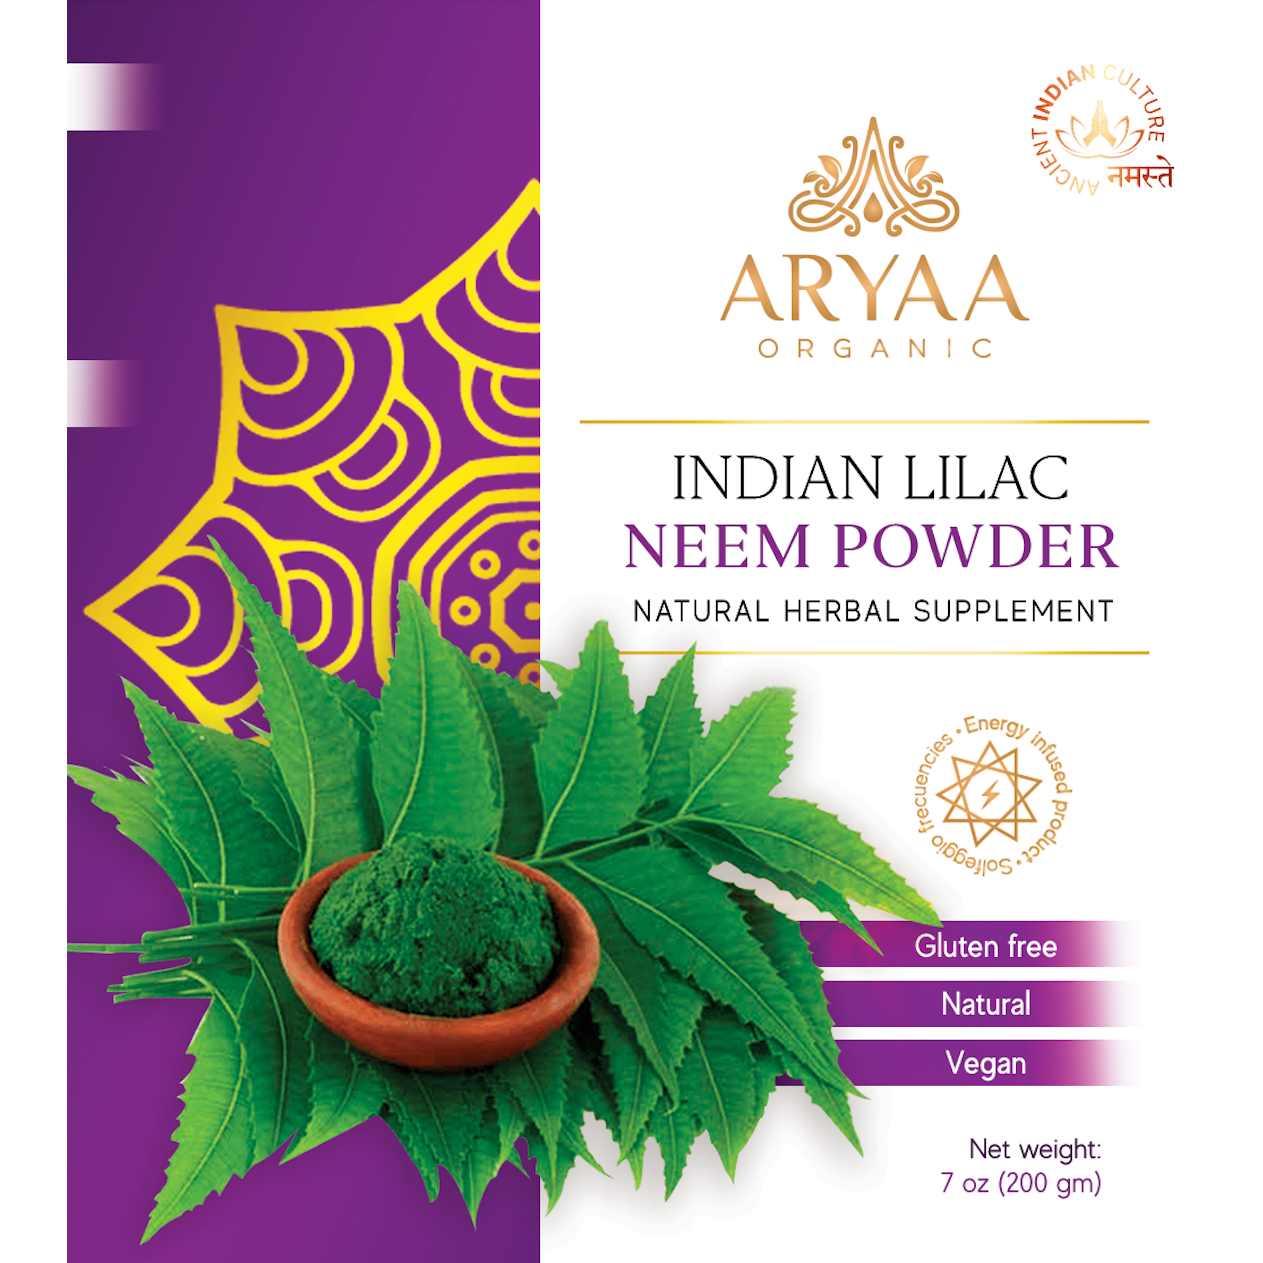 Aryaa Organic Neem  (Indian Lilac) Powder